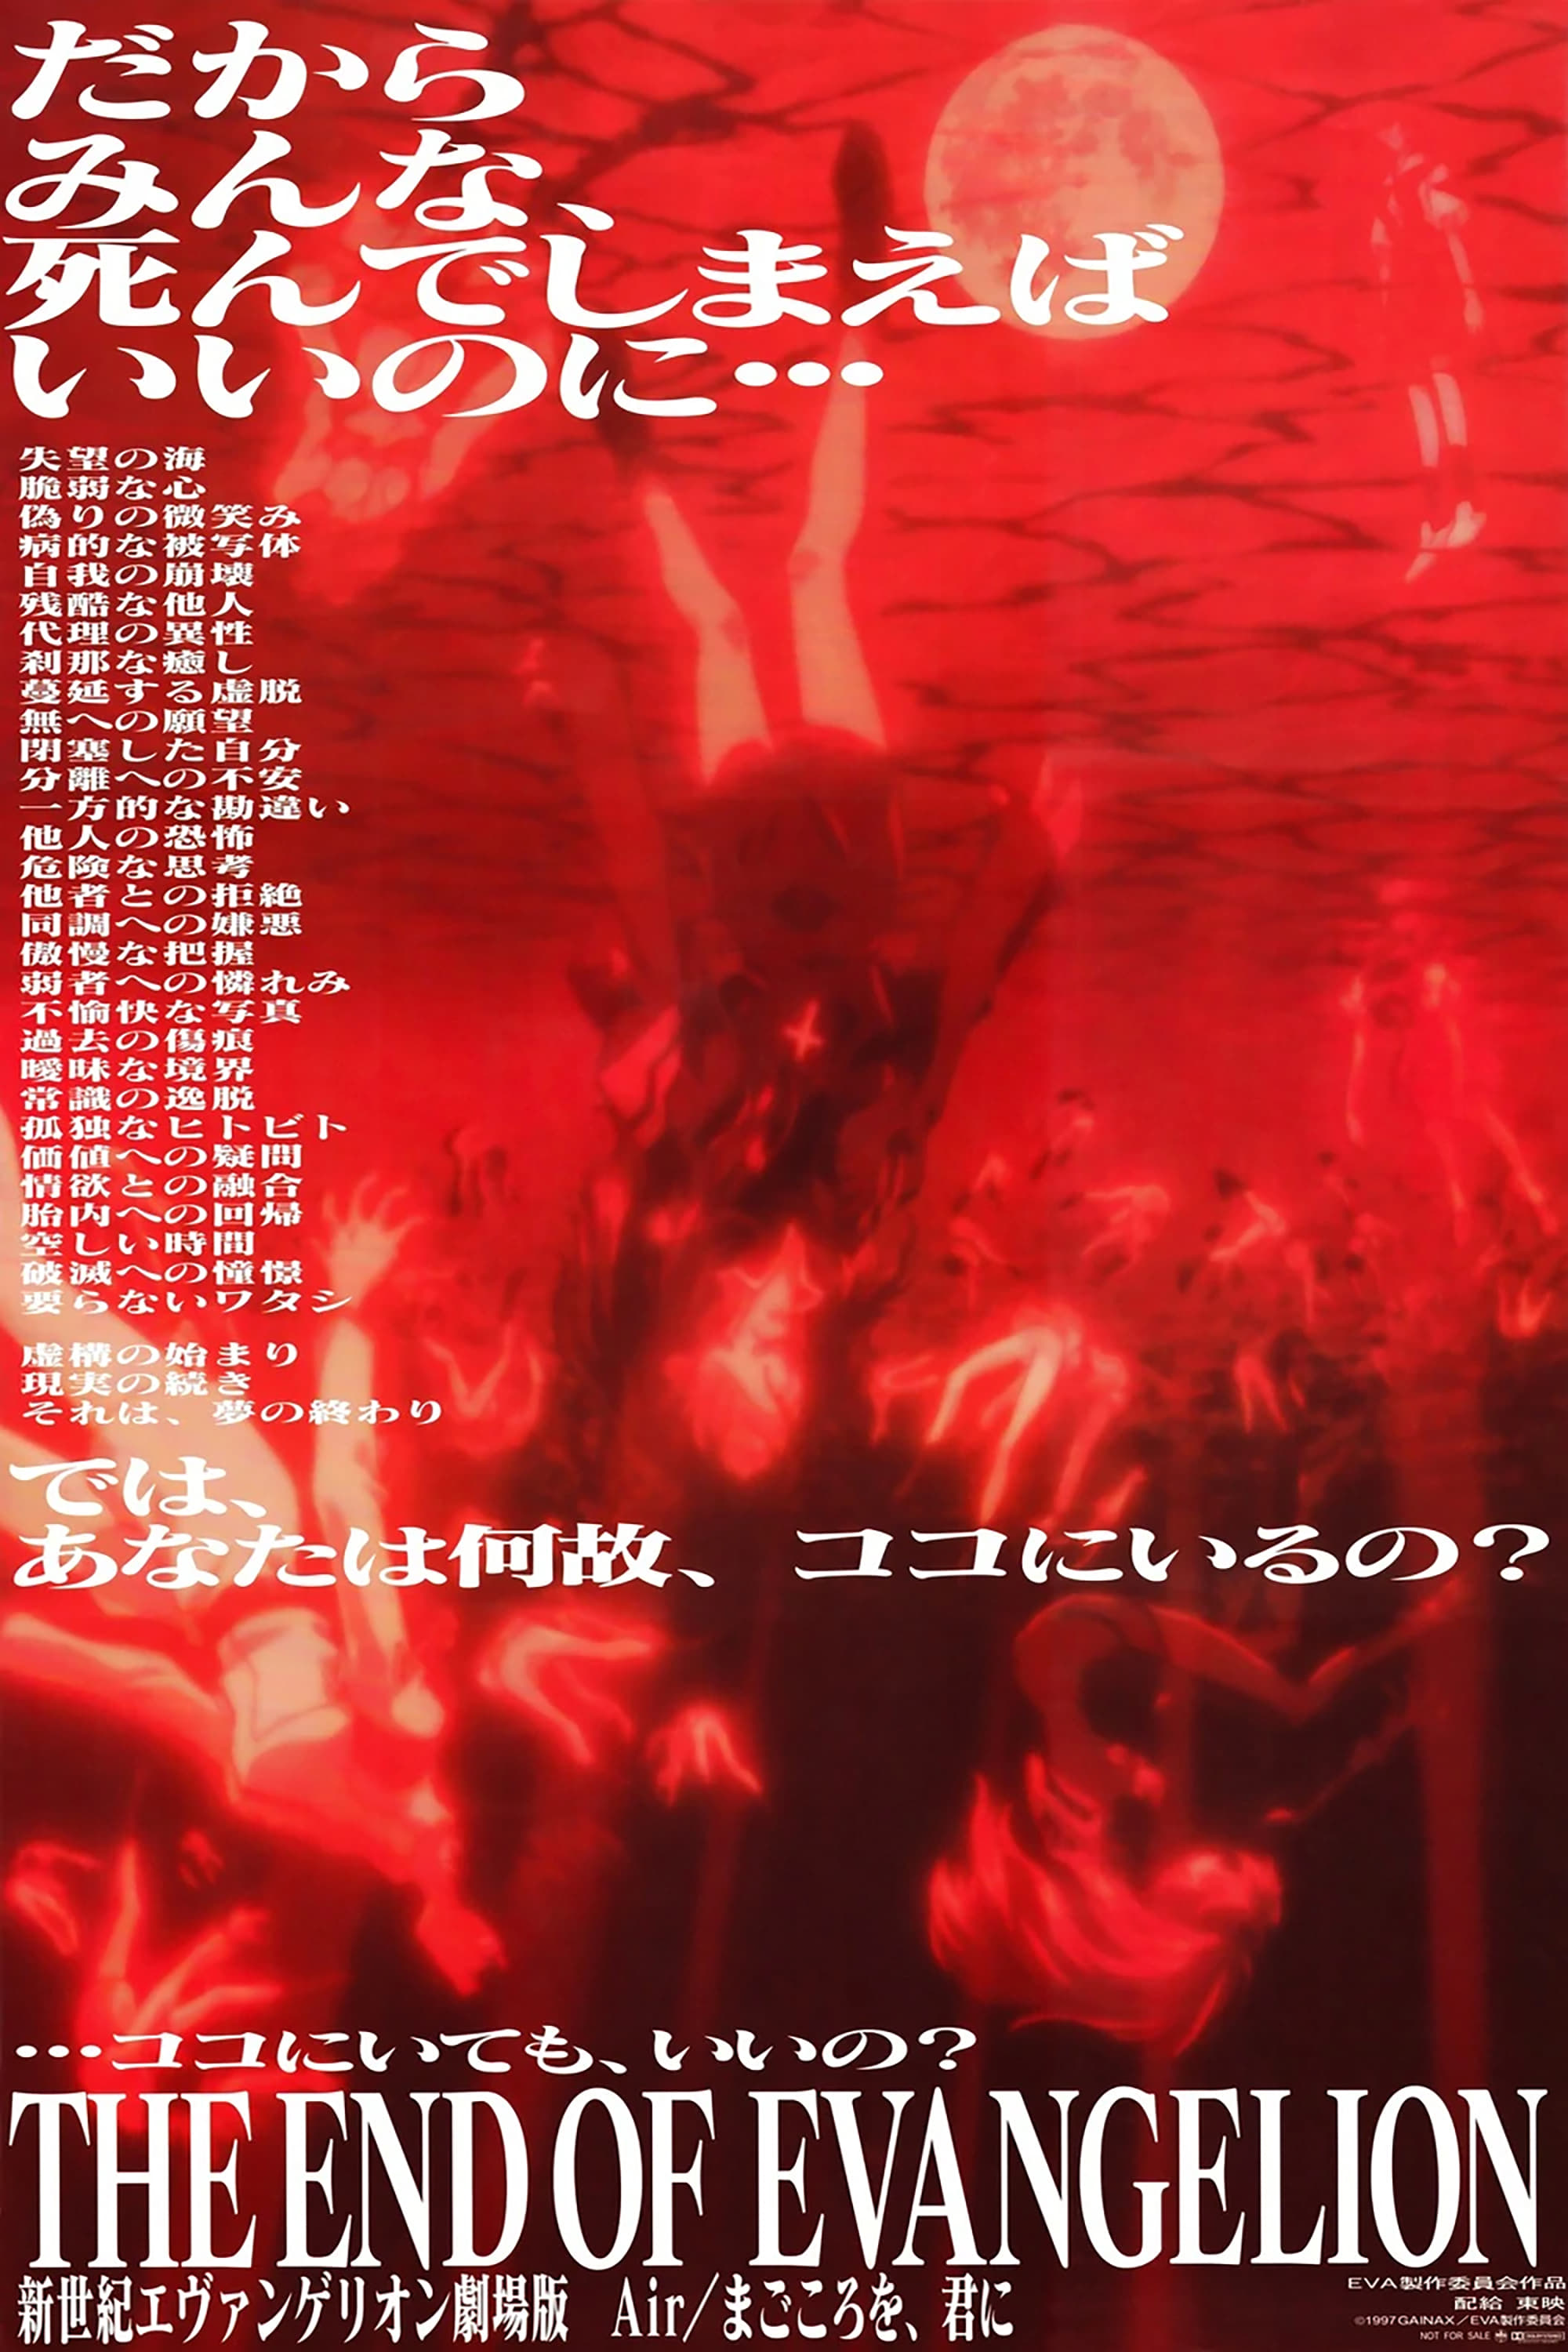 Neon Genesis Evangelion - The End of Evangelion film